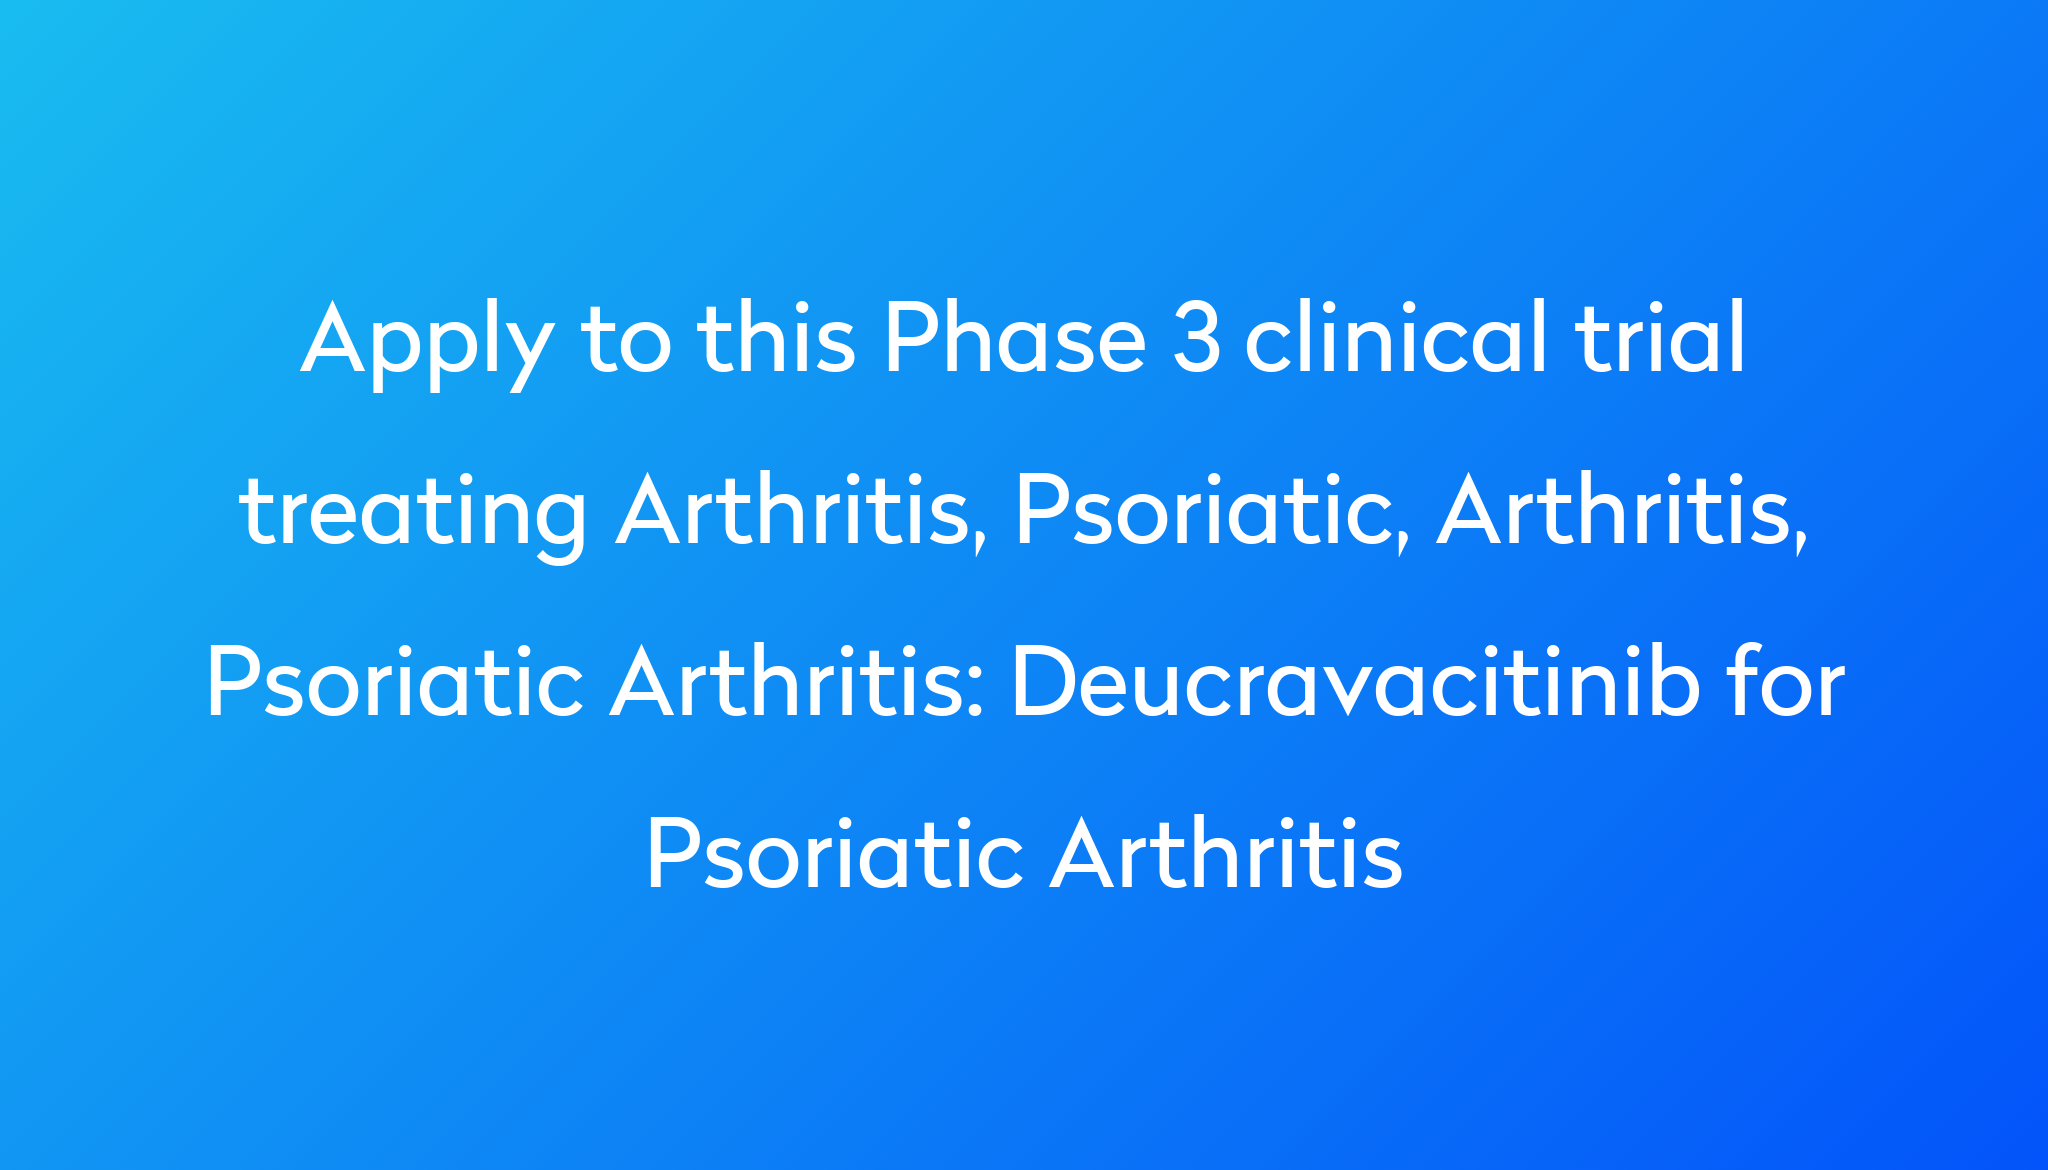 Deucravacitinib for Psoriatic Arthritis Clinical Trial 2022 | Power